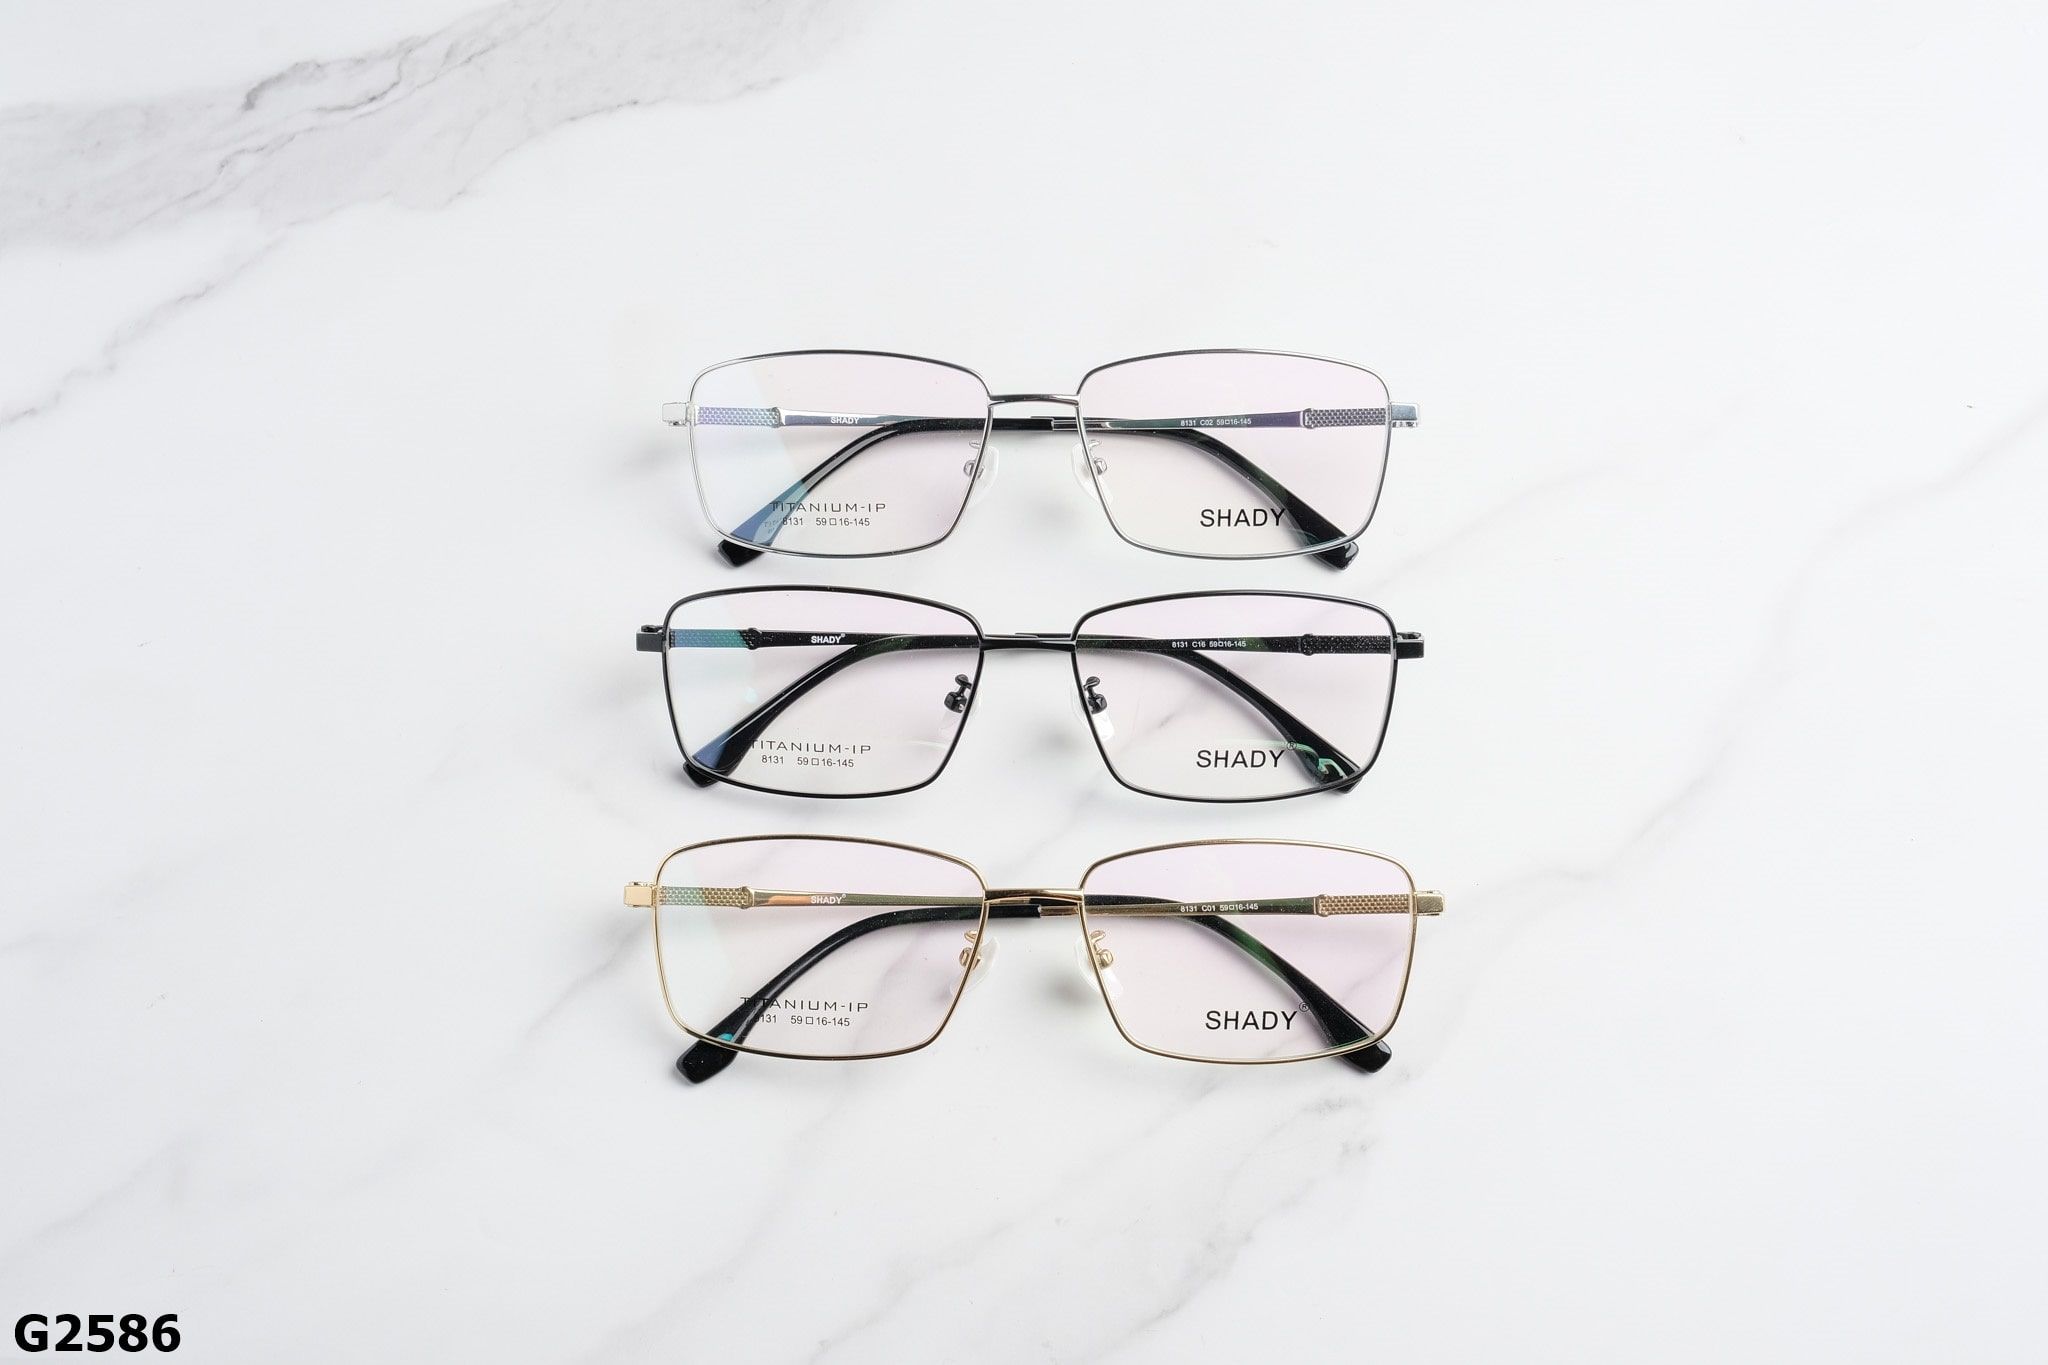  SHADY Eyewear - Glasses - G2586 